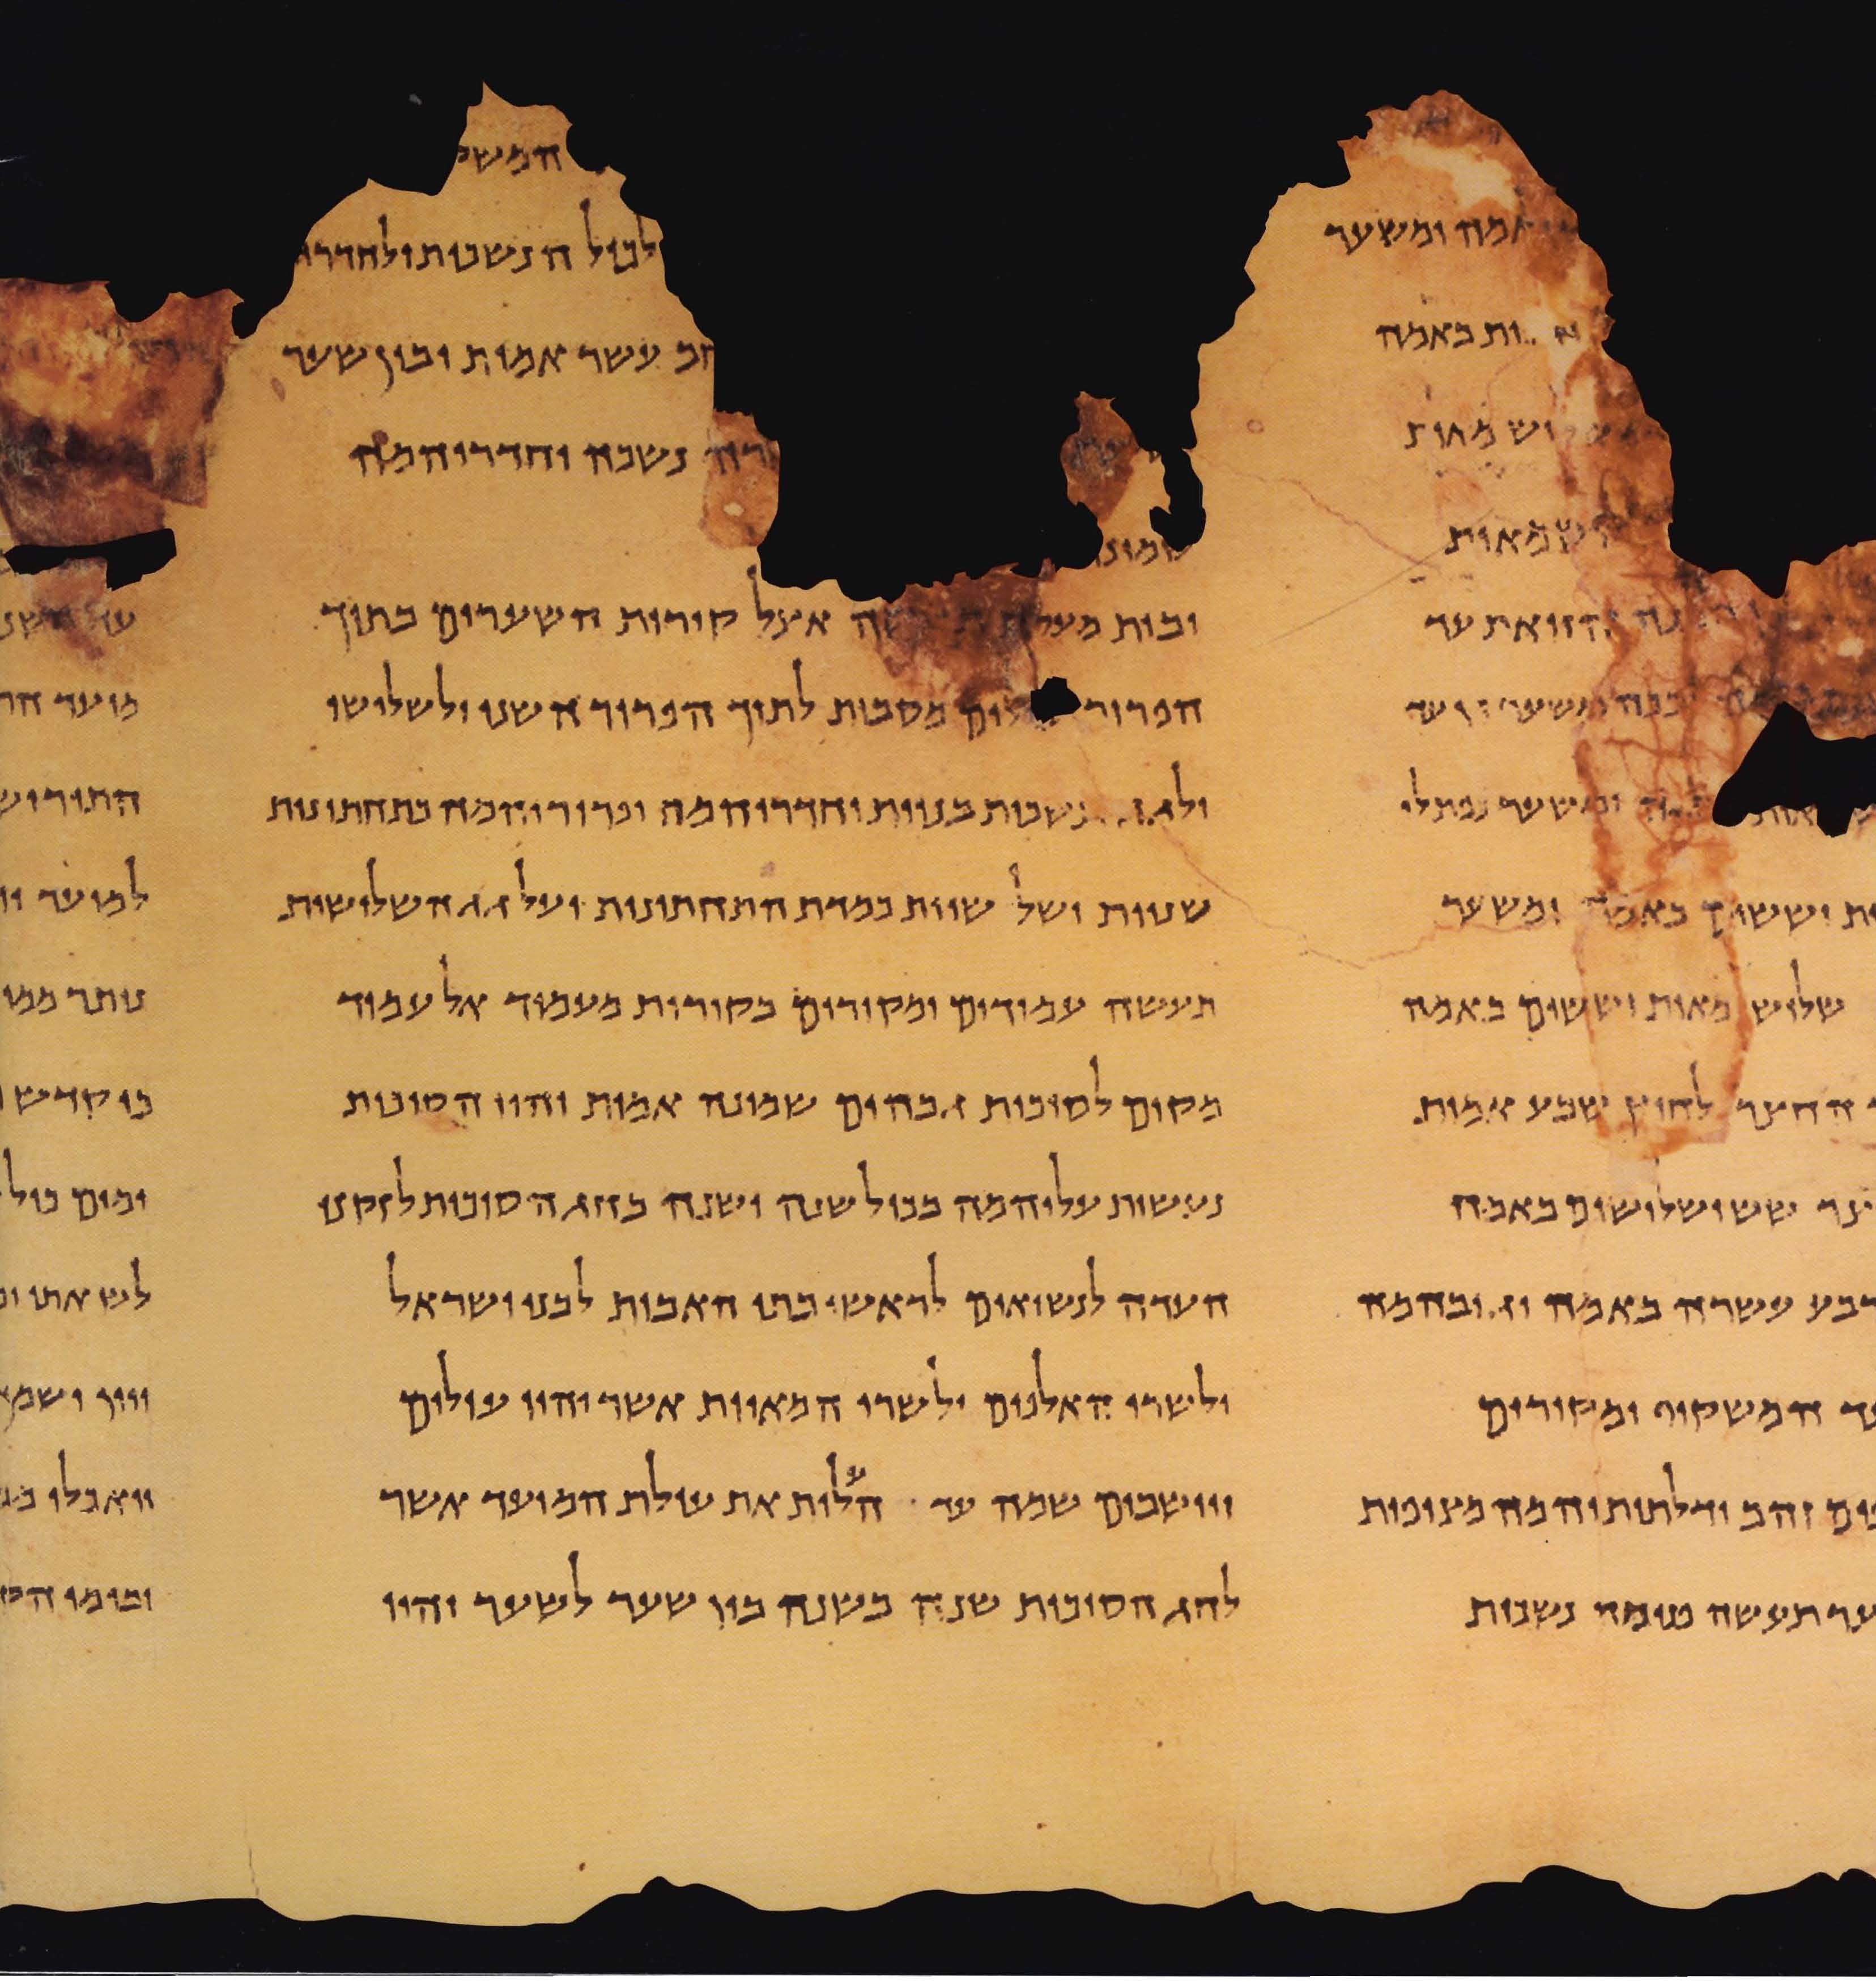 Rediscovering the Dead Sea Scrolls